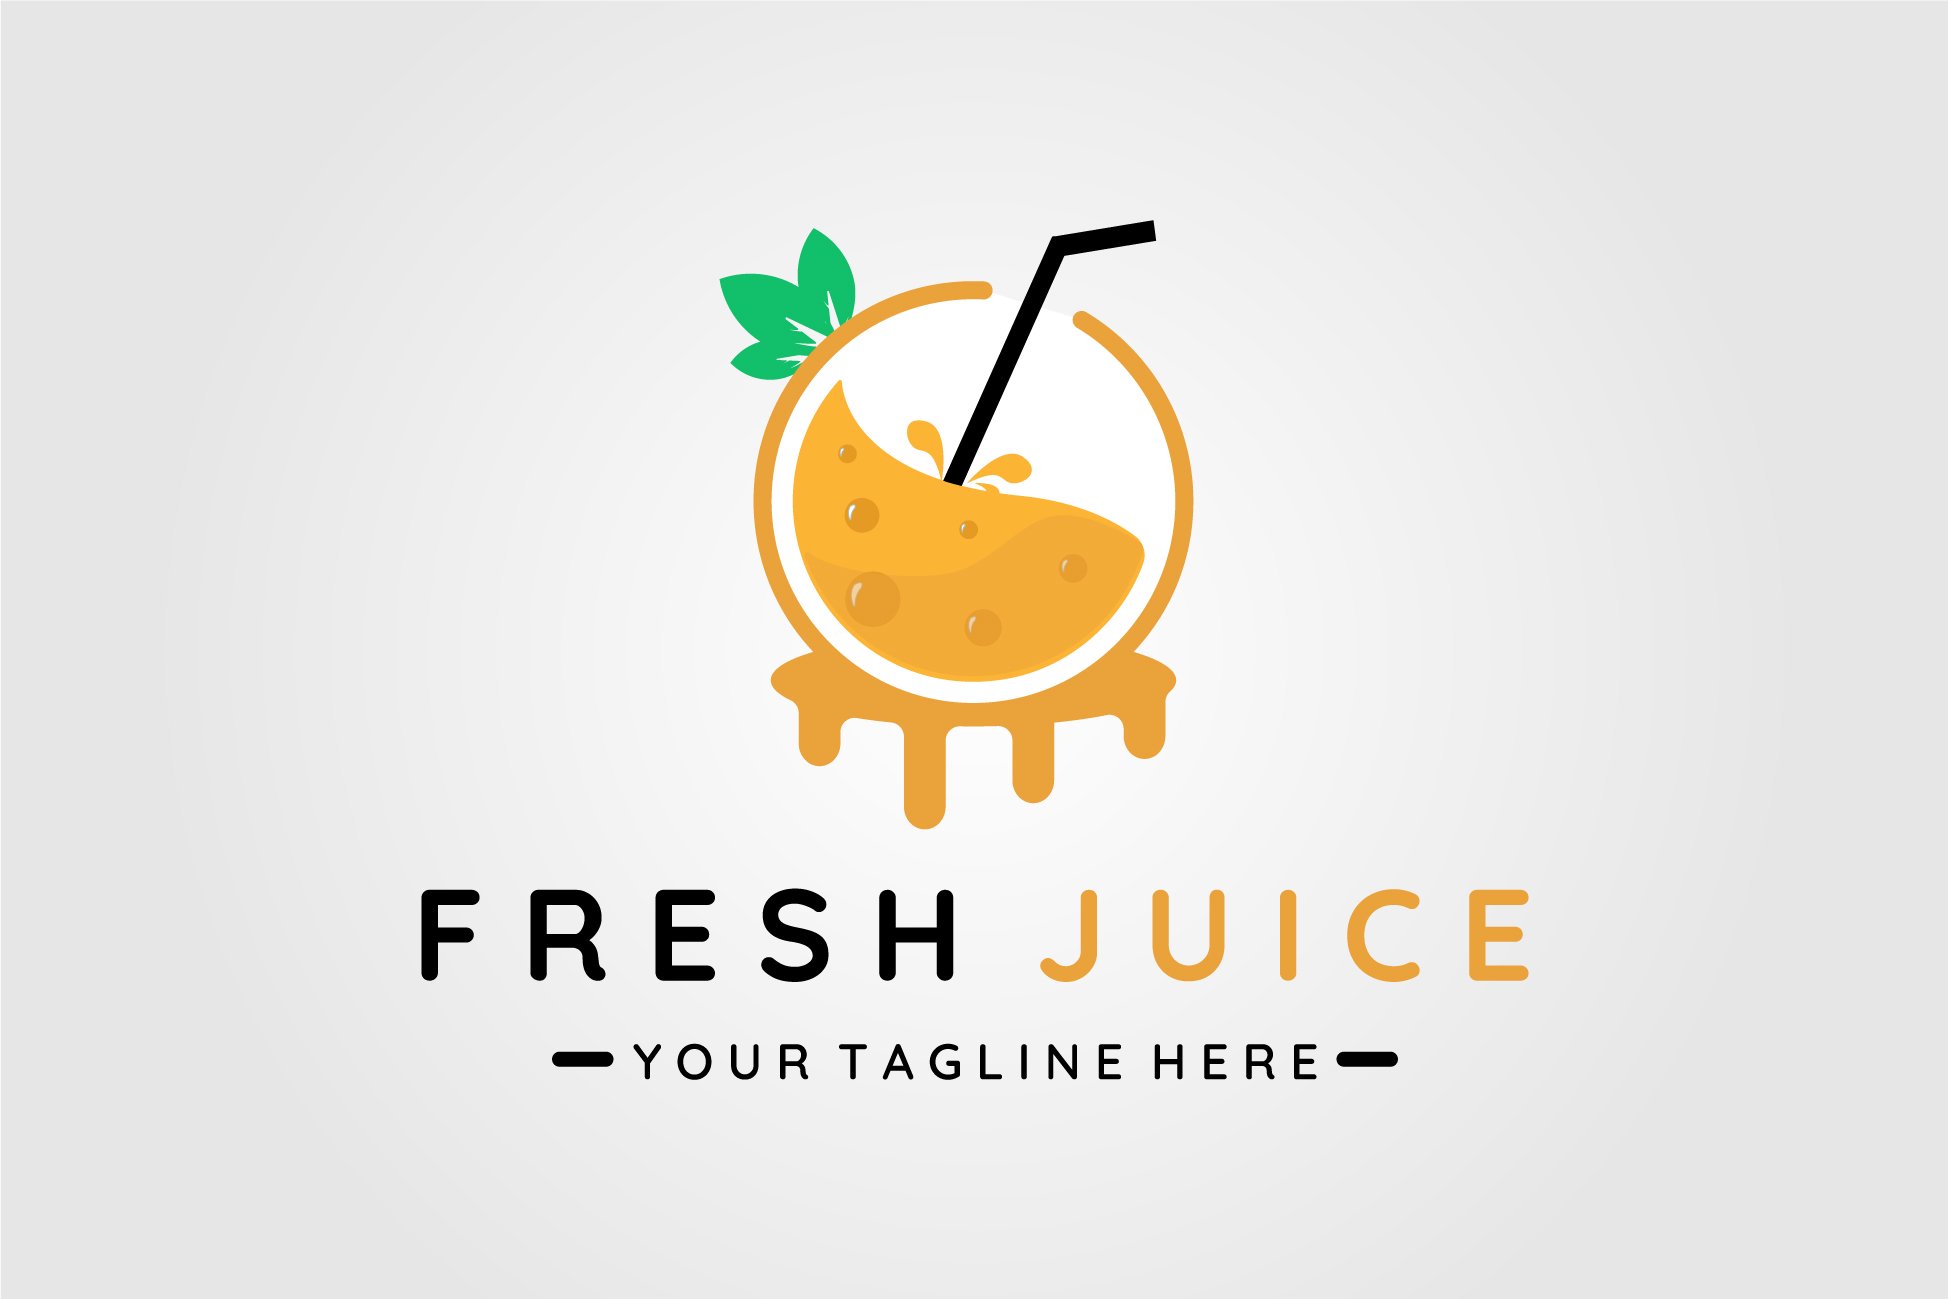 fresh fruit juice logo vector cover image.